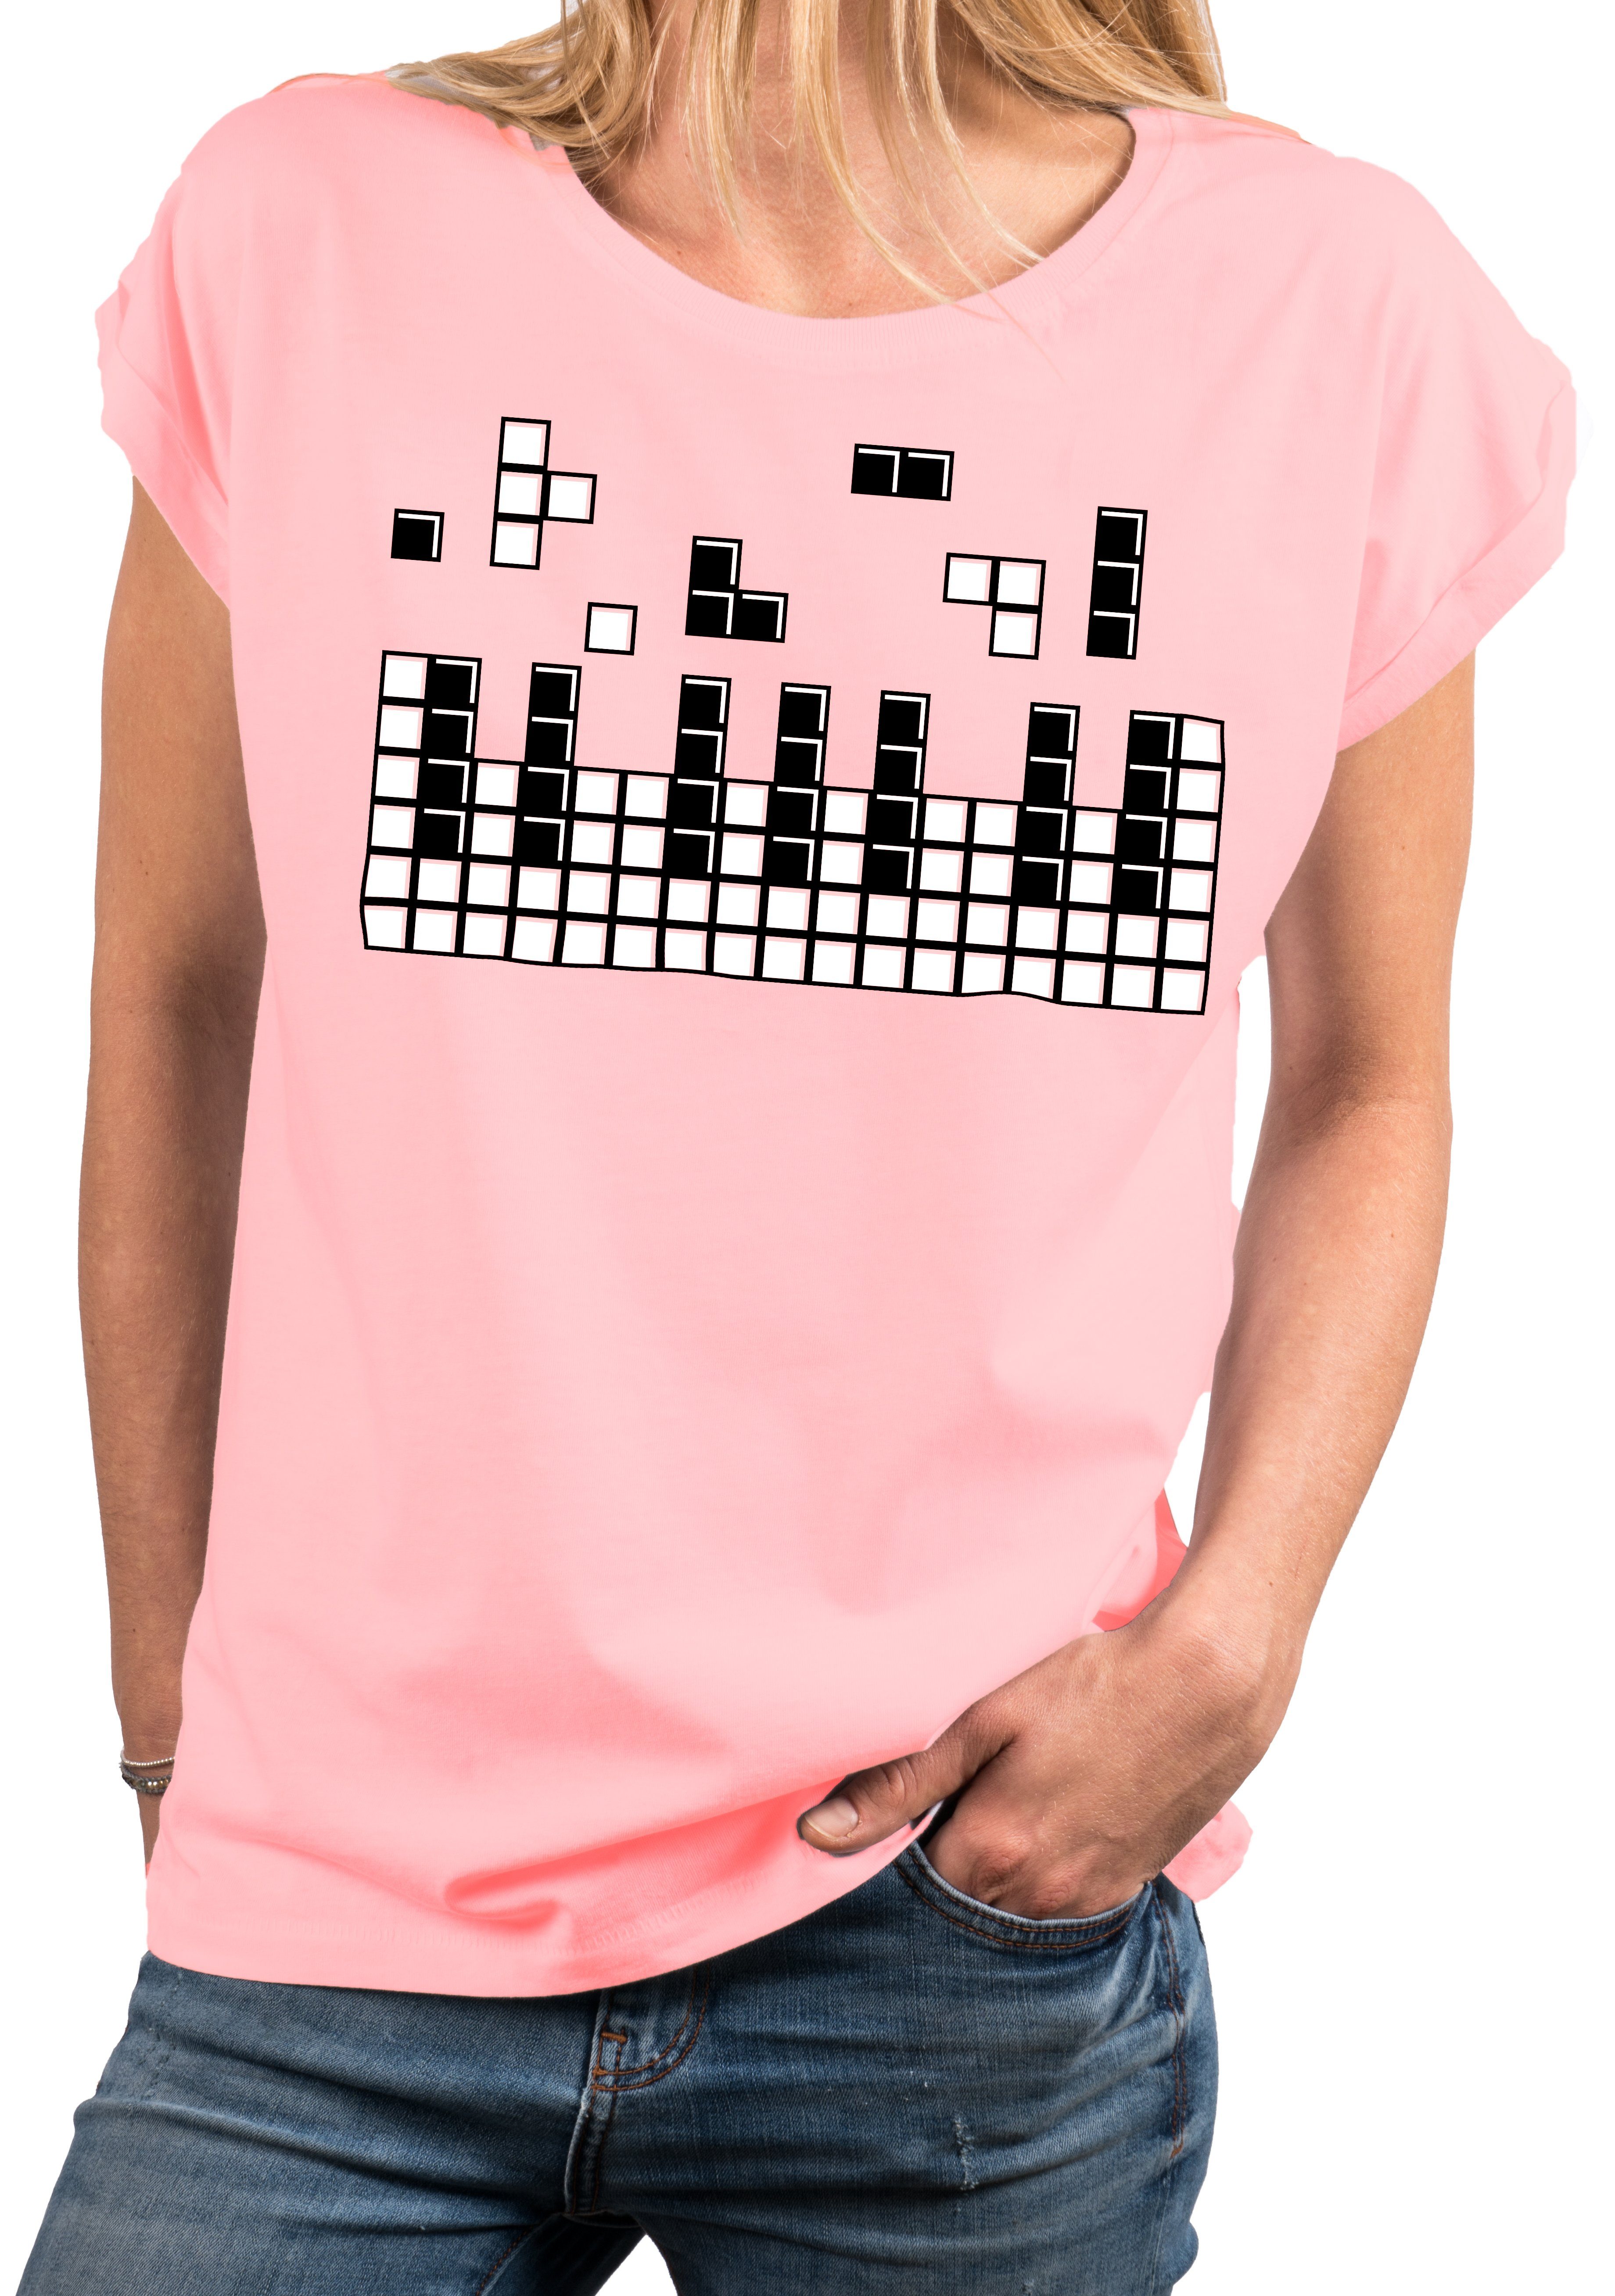 Frauen Motiv Top Damen Größen Gamer Nerd MAKAYA Geschenke Tunika, Kurzarm große Print-Shirt Klavier Rosa Piano